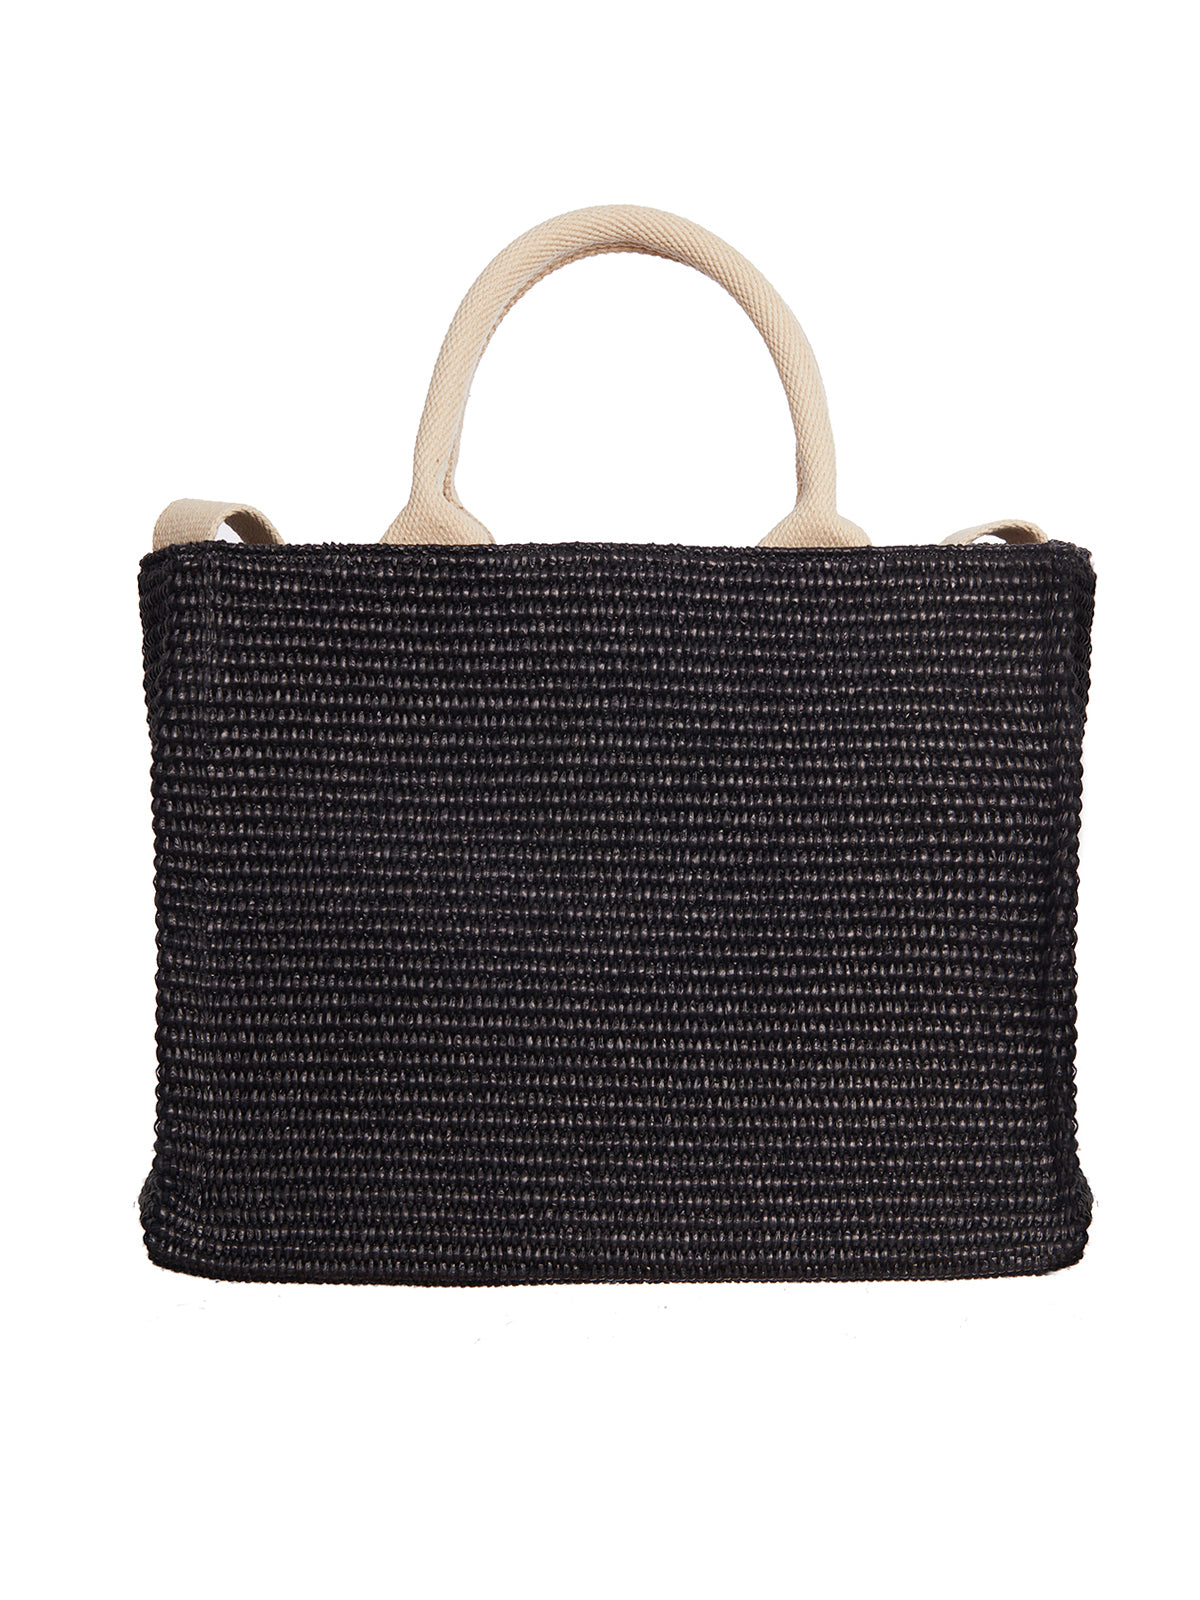 MARNI Elegant Black Tote Handbag for the Modern Woman